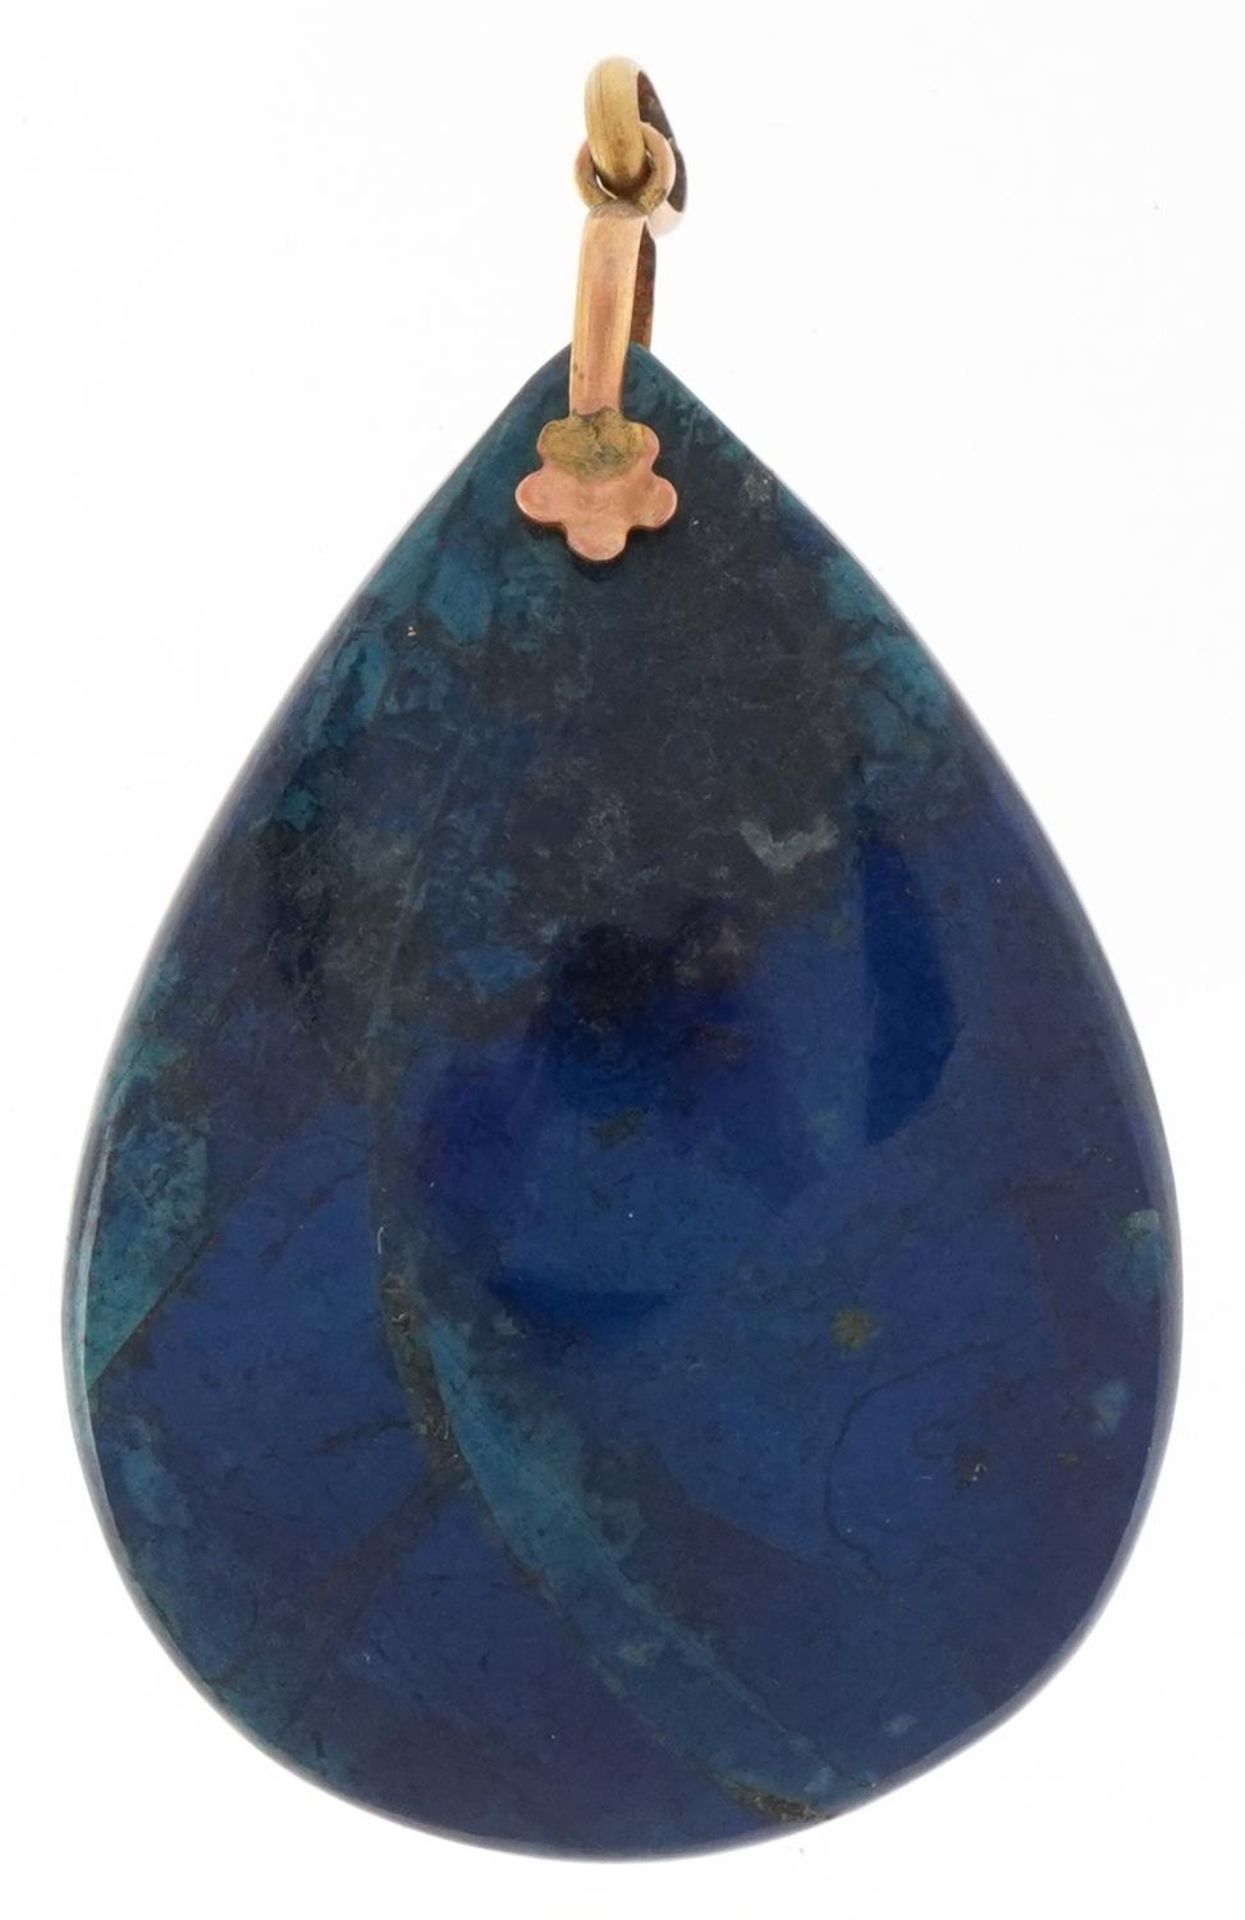 Lapis lazuli teardrop pendant with 9ct gold suspension loop, 5cm high, 20.6g